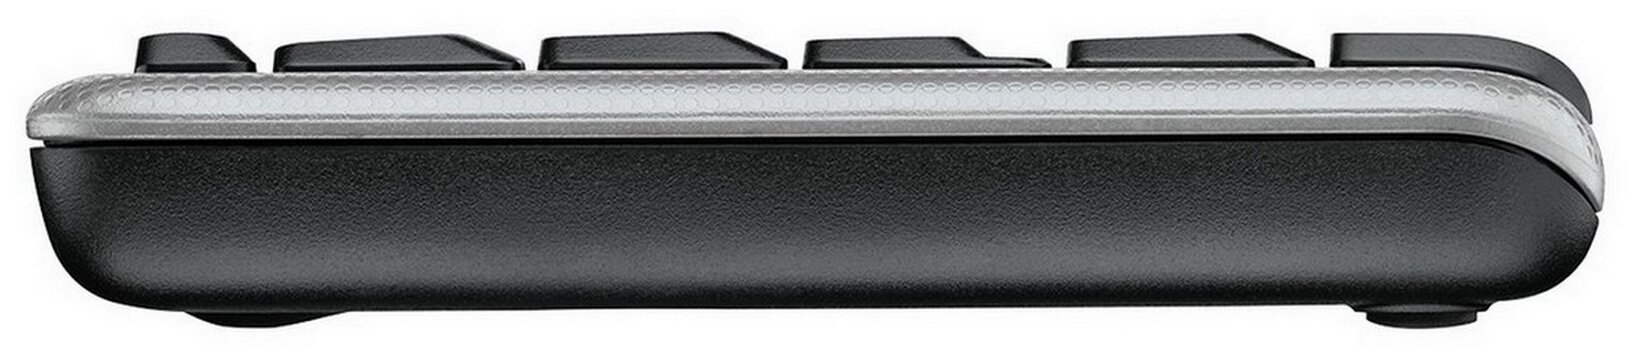 Клавиатура Logitech K230 Compact Wireless